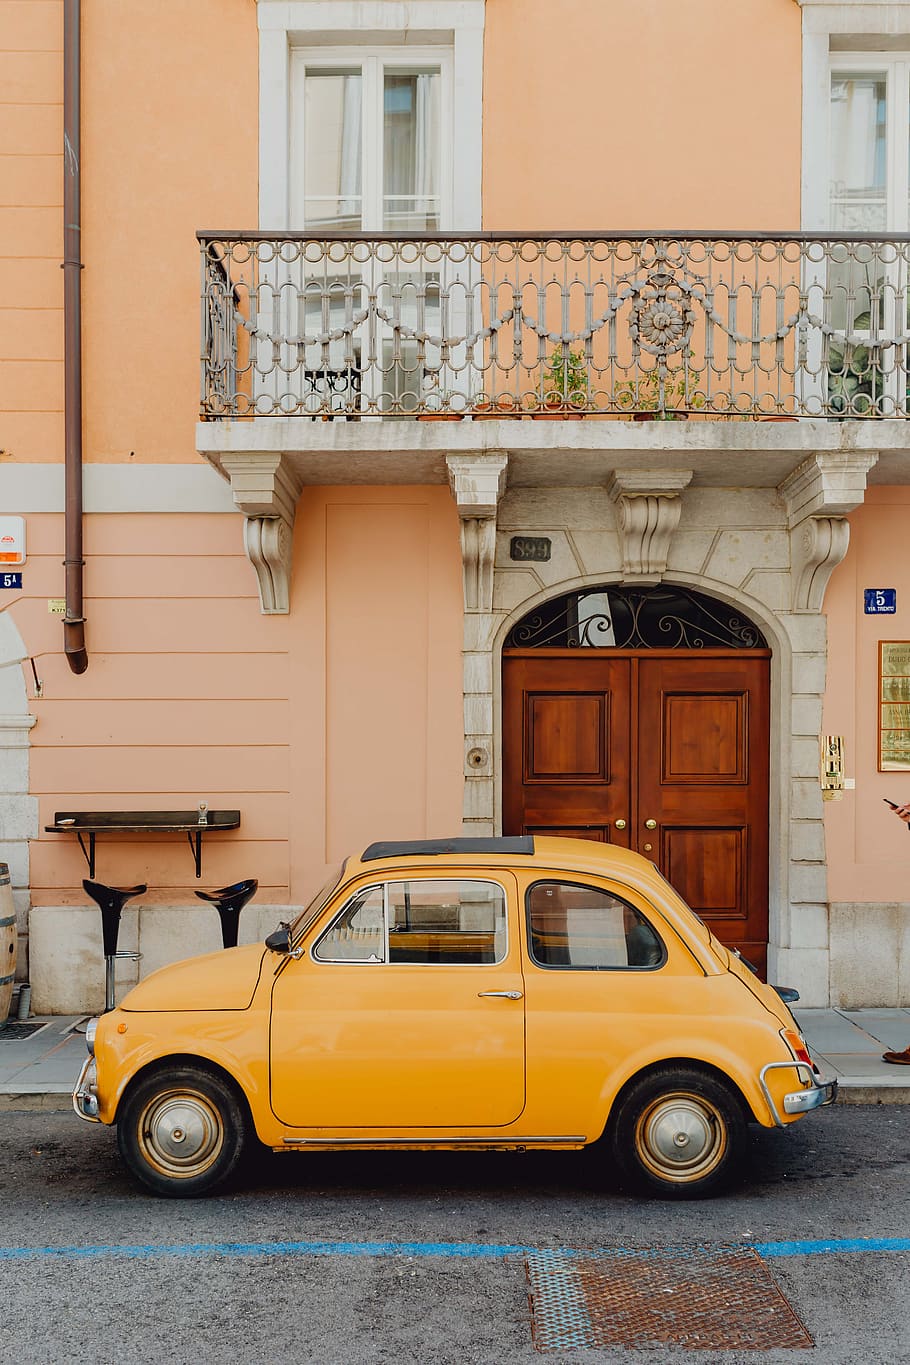 500, antigo, vintage, Itália, italia, Europa, amarelo, carro, transporte, rua